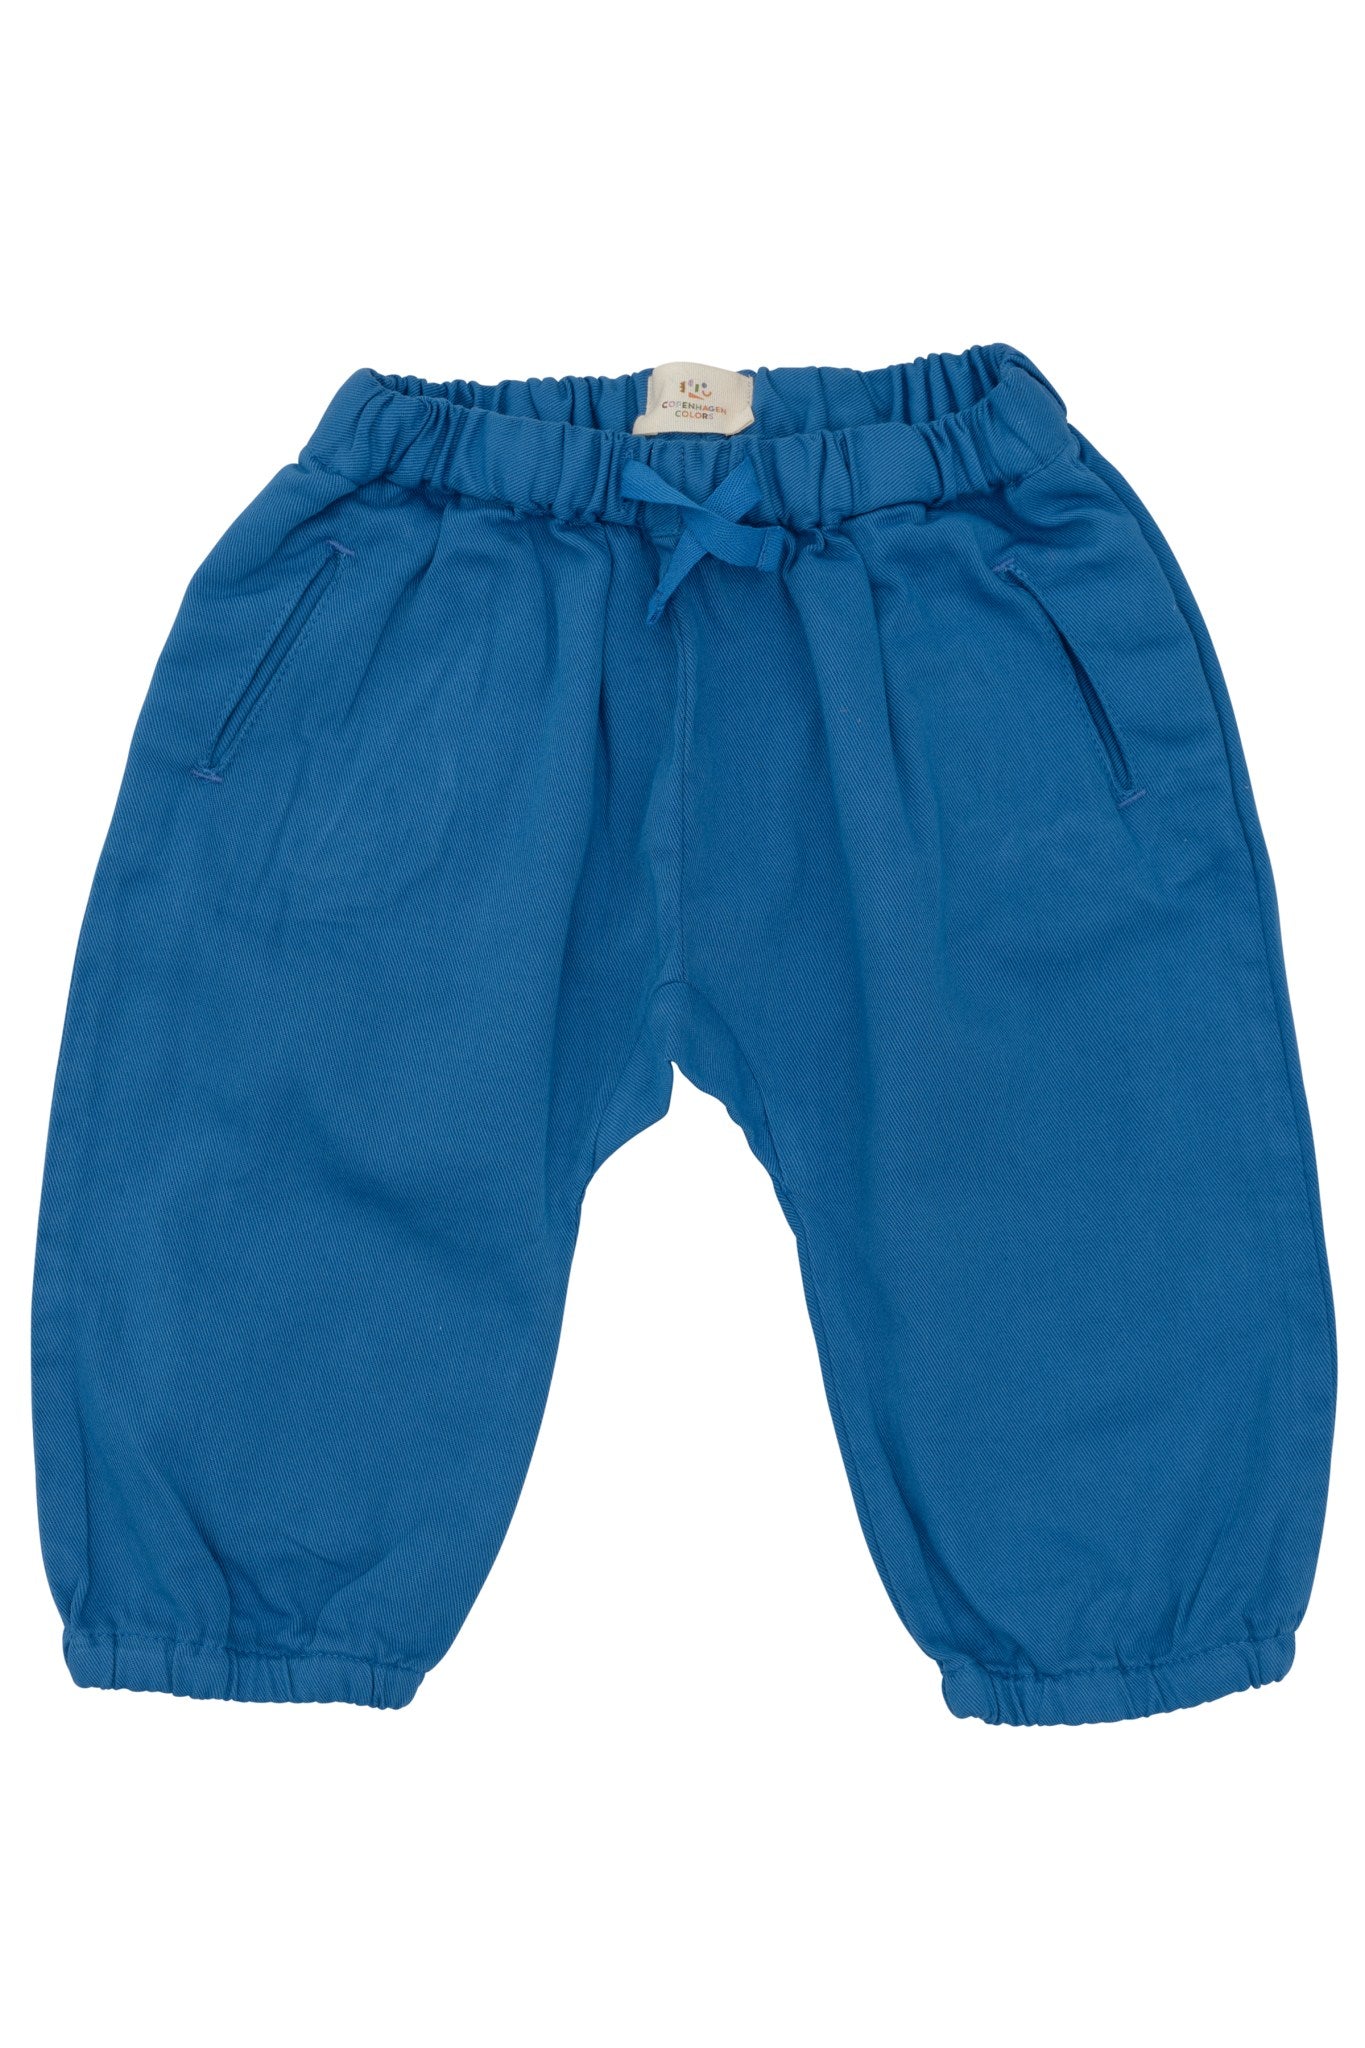 TWILL BABY PANTS - SHARP BLUE